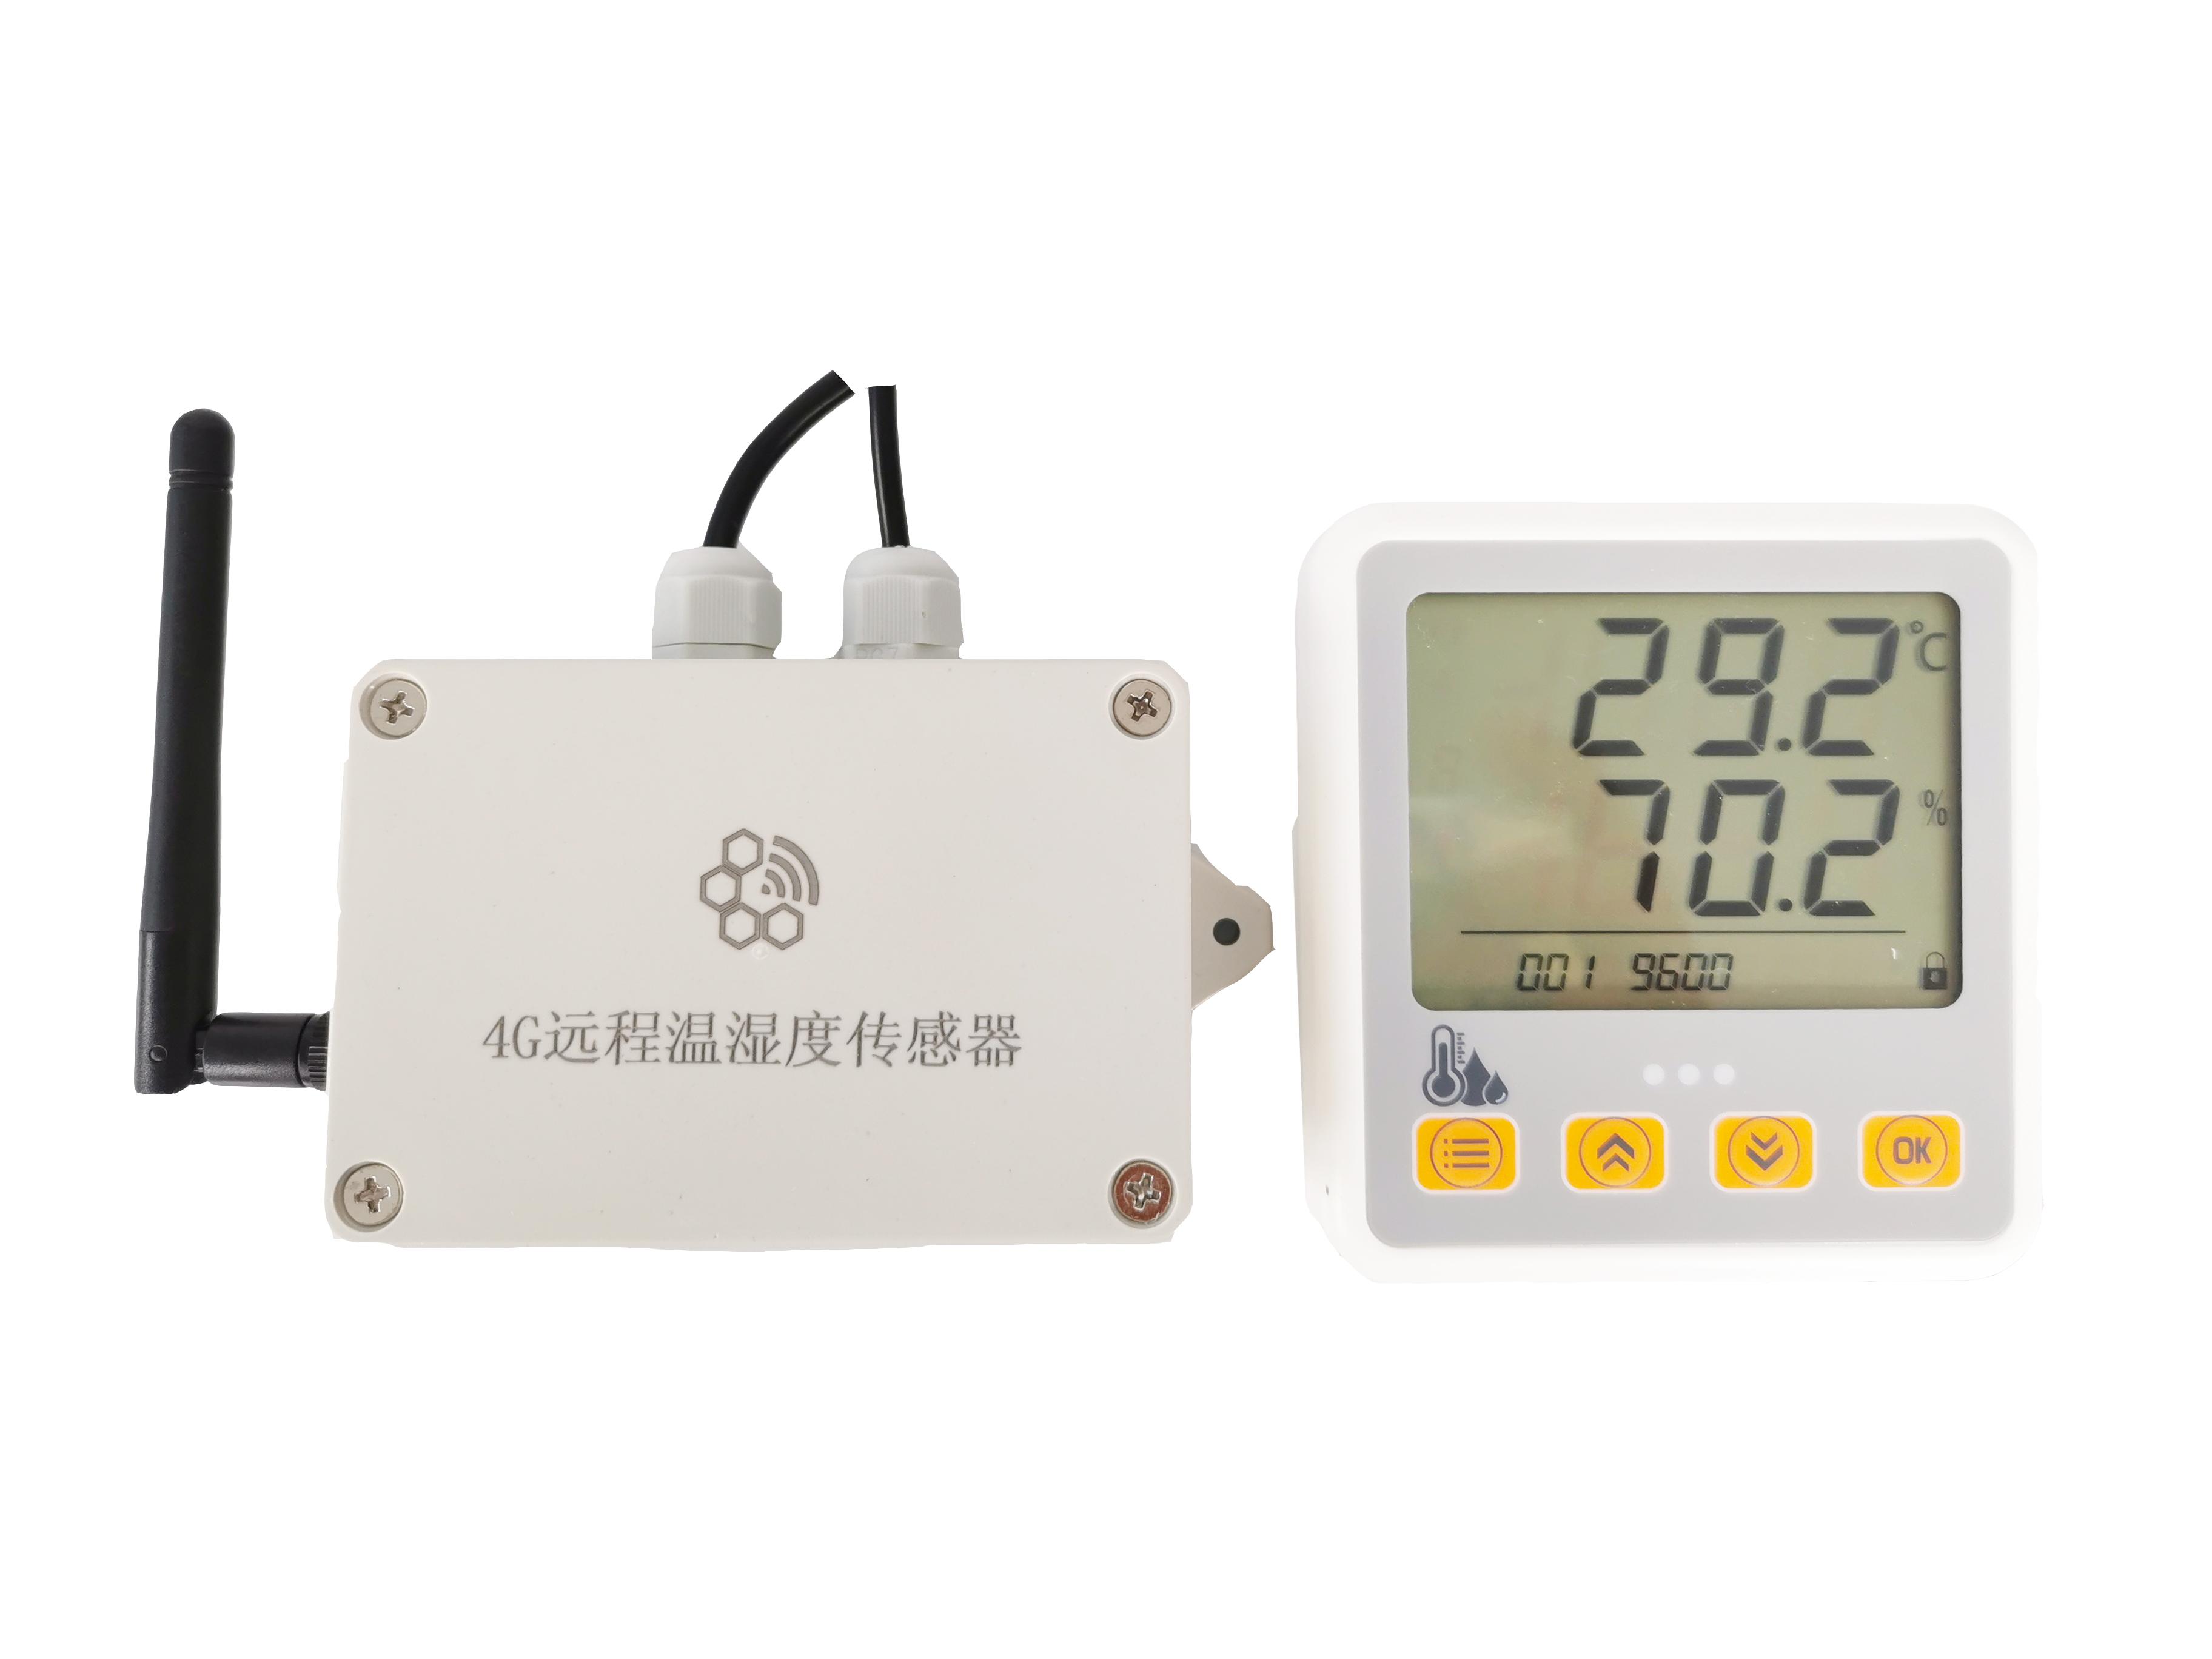 4G遠程溫濕度傳感器在醫院中的應用